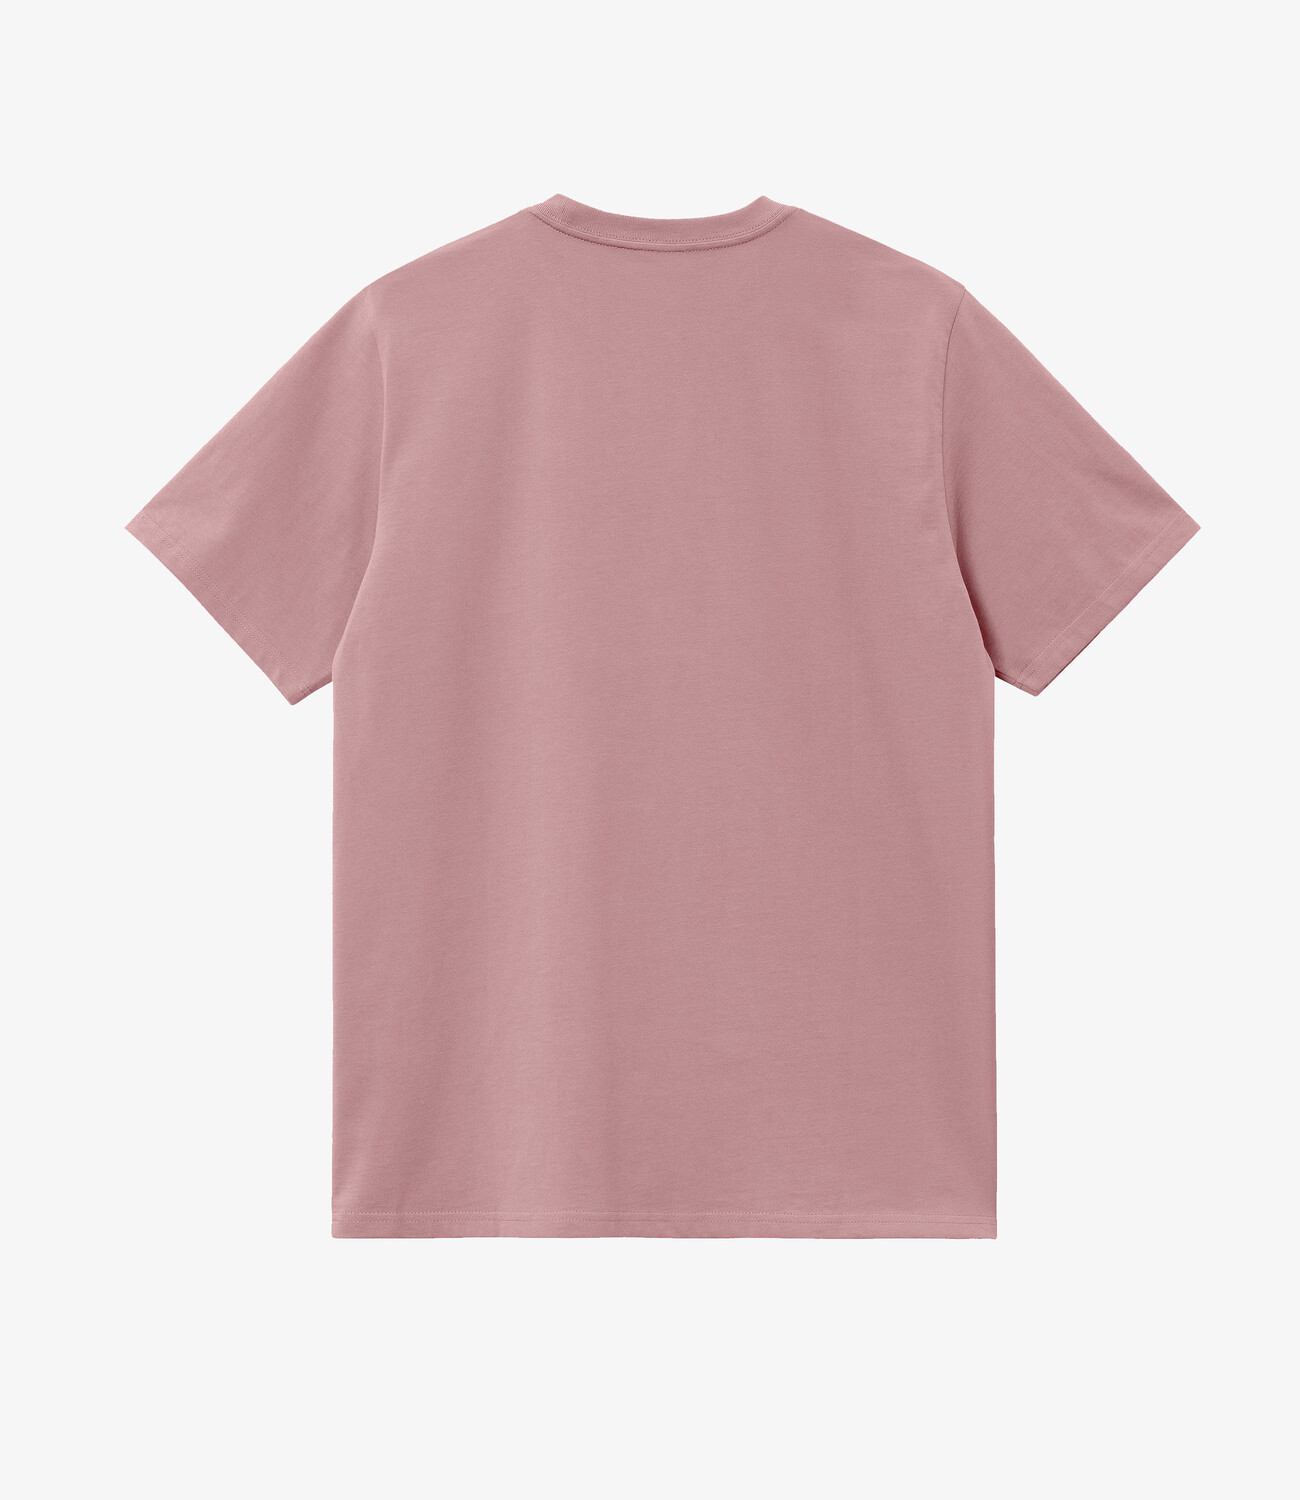 Chase T-shirt - Glassy pink